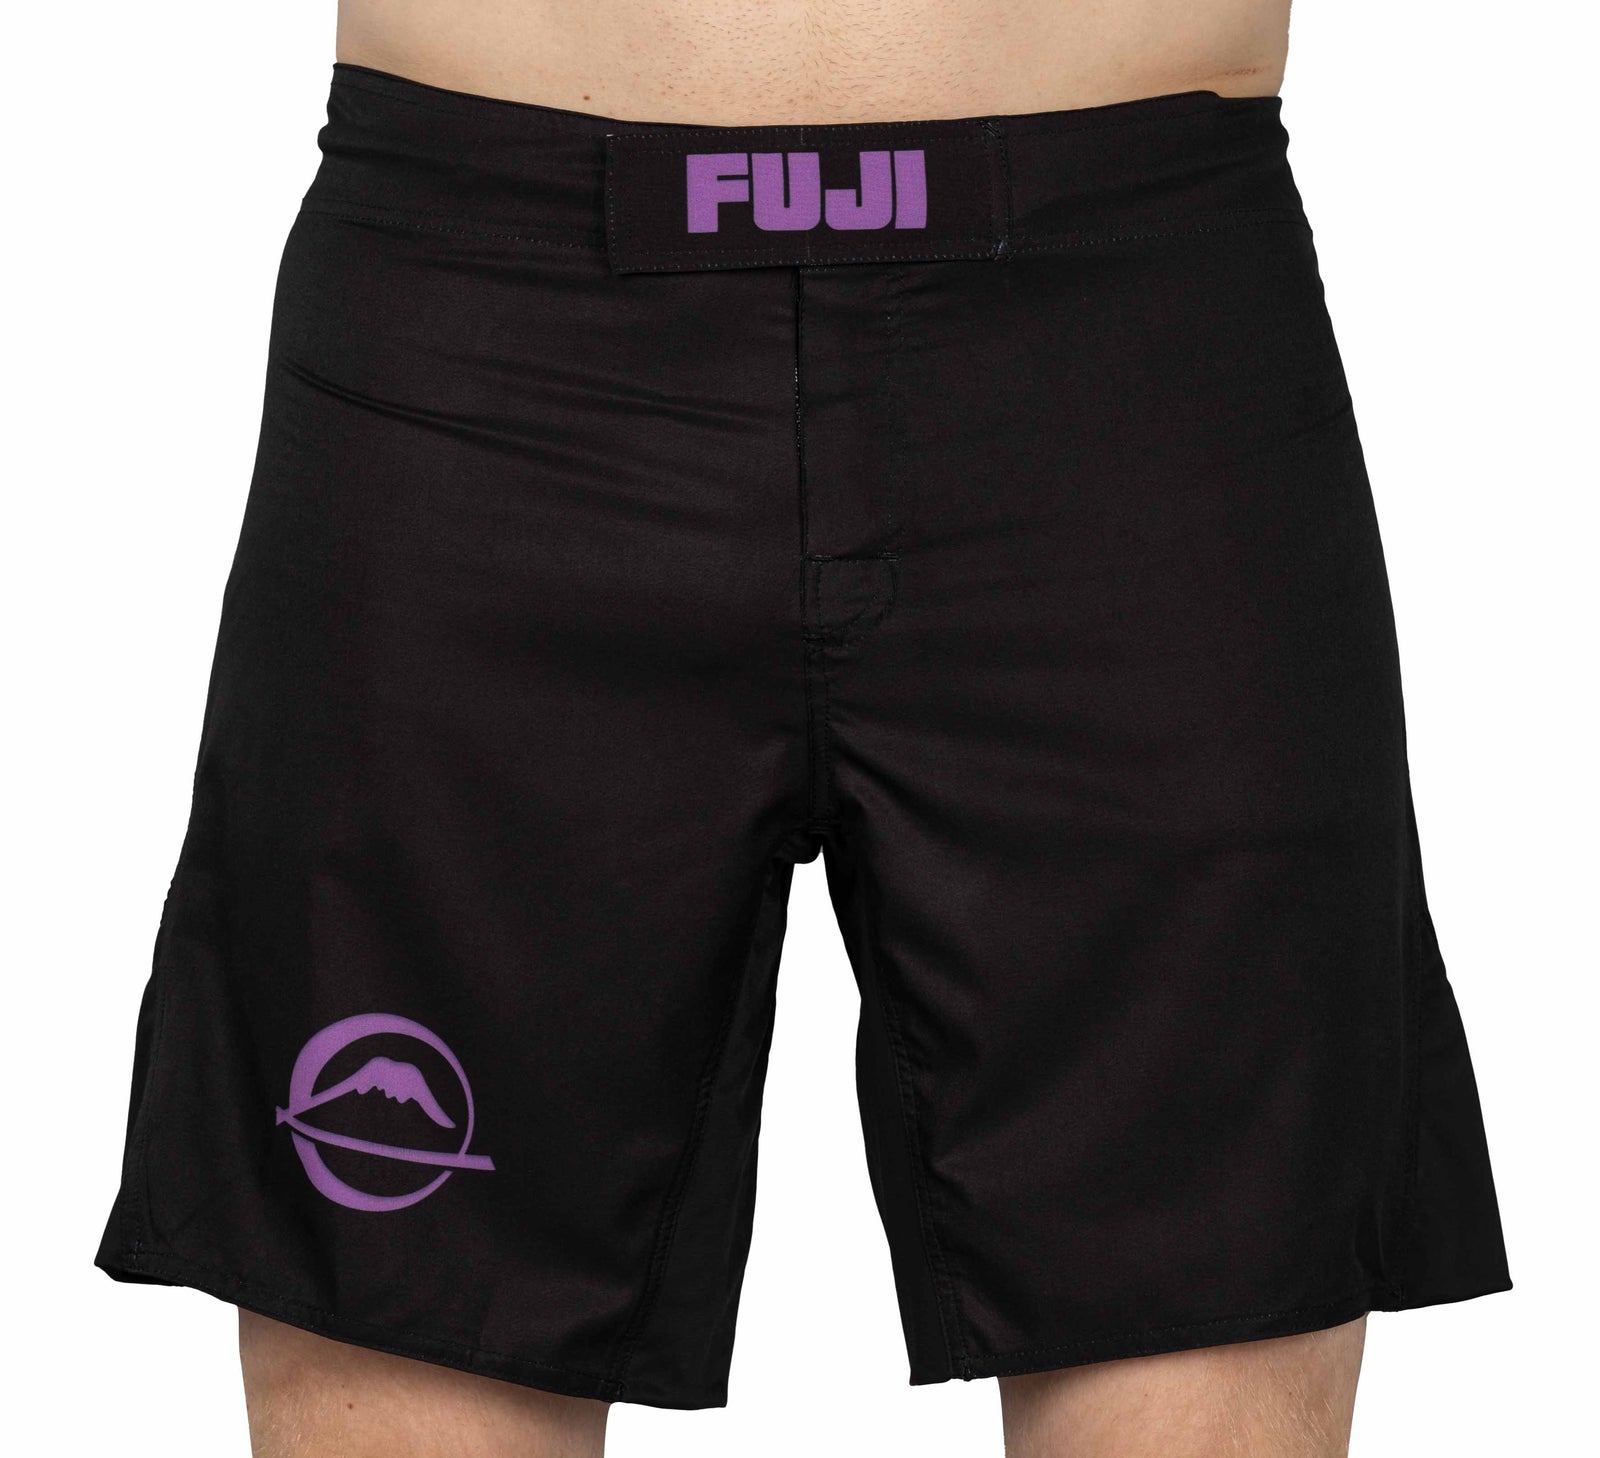 Baseline Fight Shorts Black/Purple